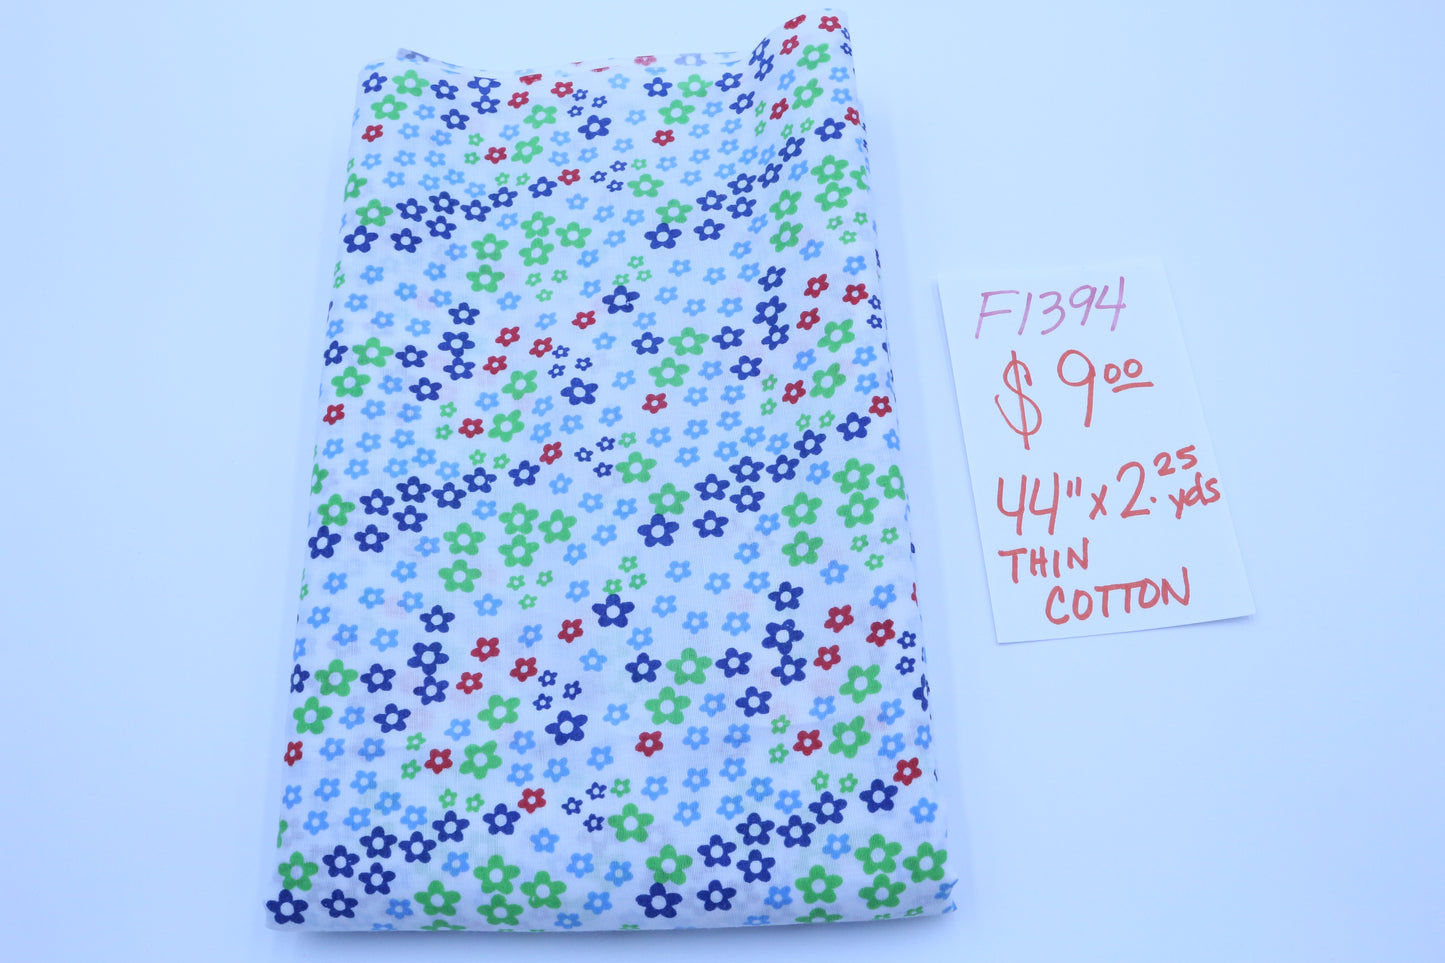 Retro Flower Print Cotton Fabric 44" x 2.25 yds